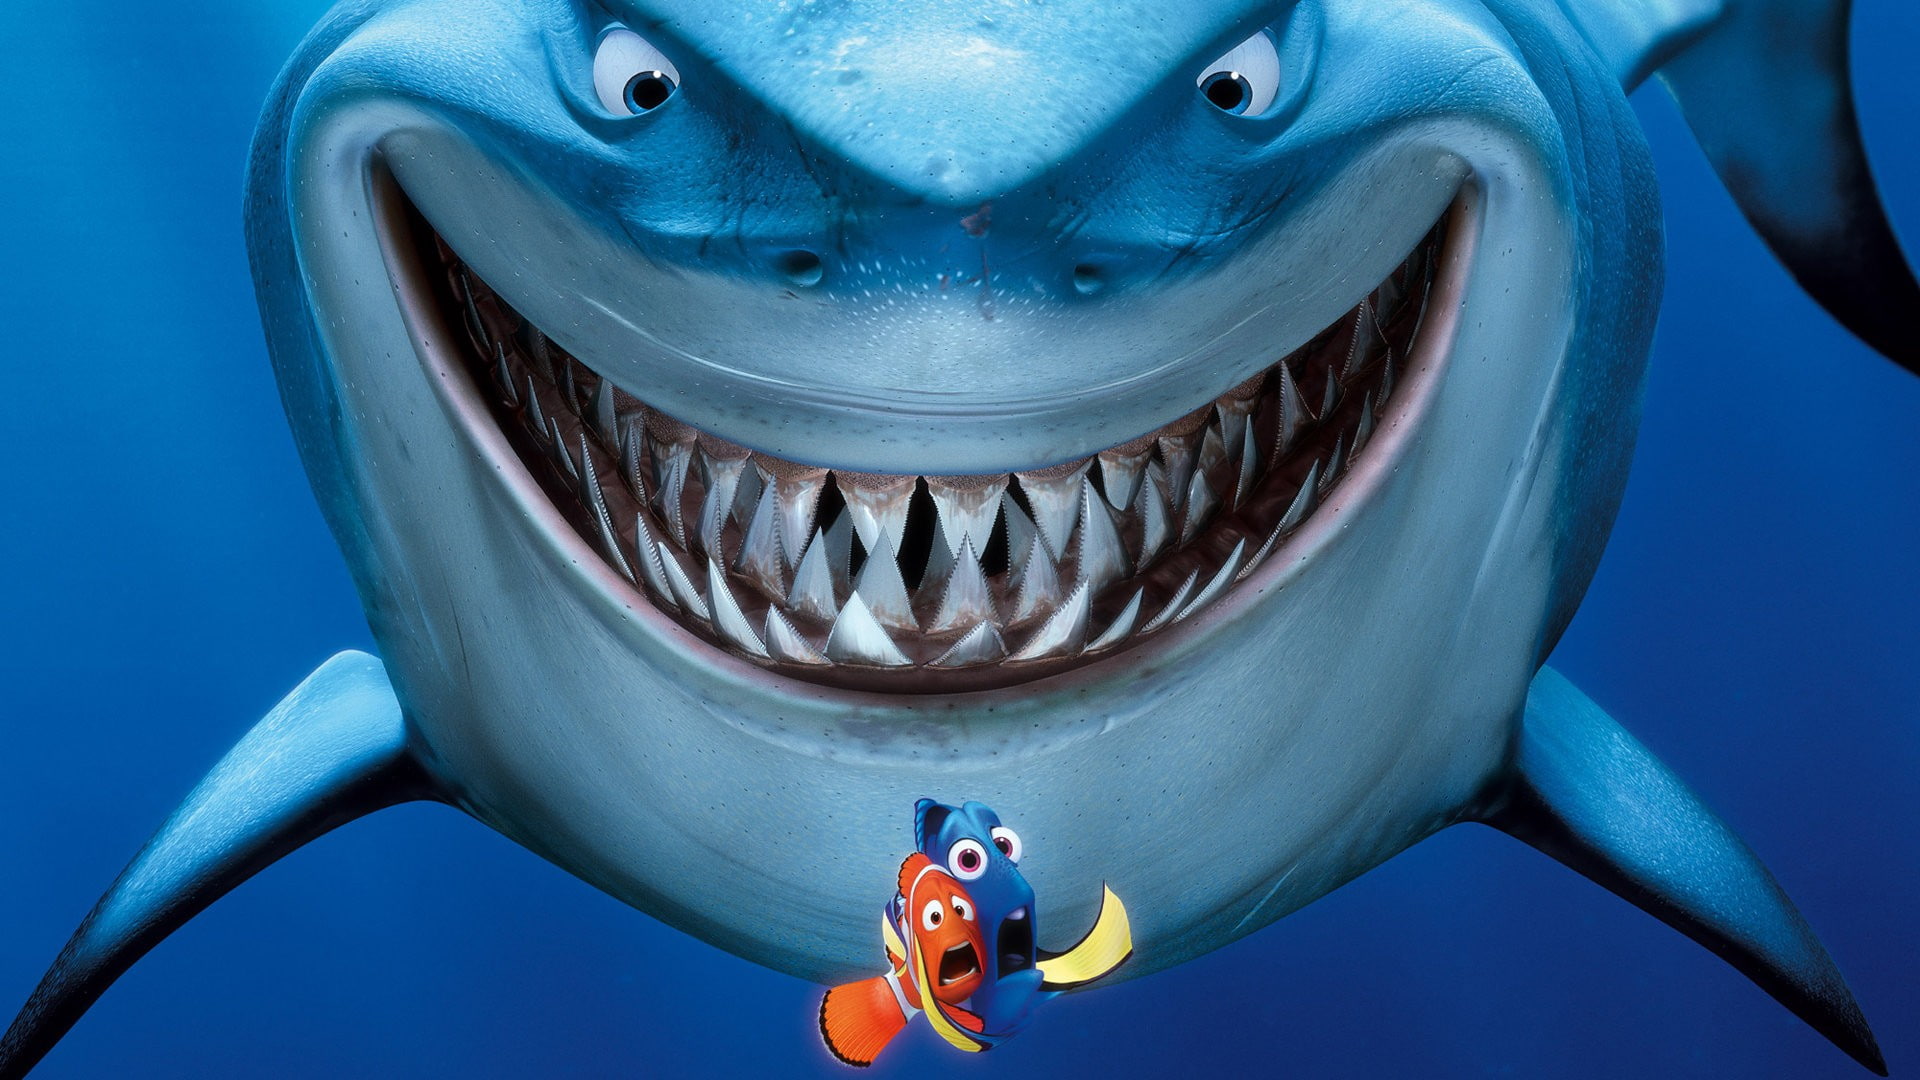 Finding Nemo wallpaper, movies, shark, movie poster, animated movies